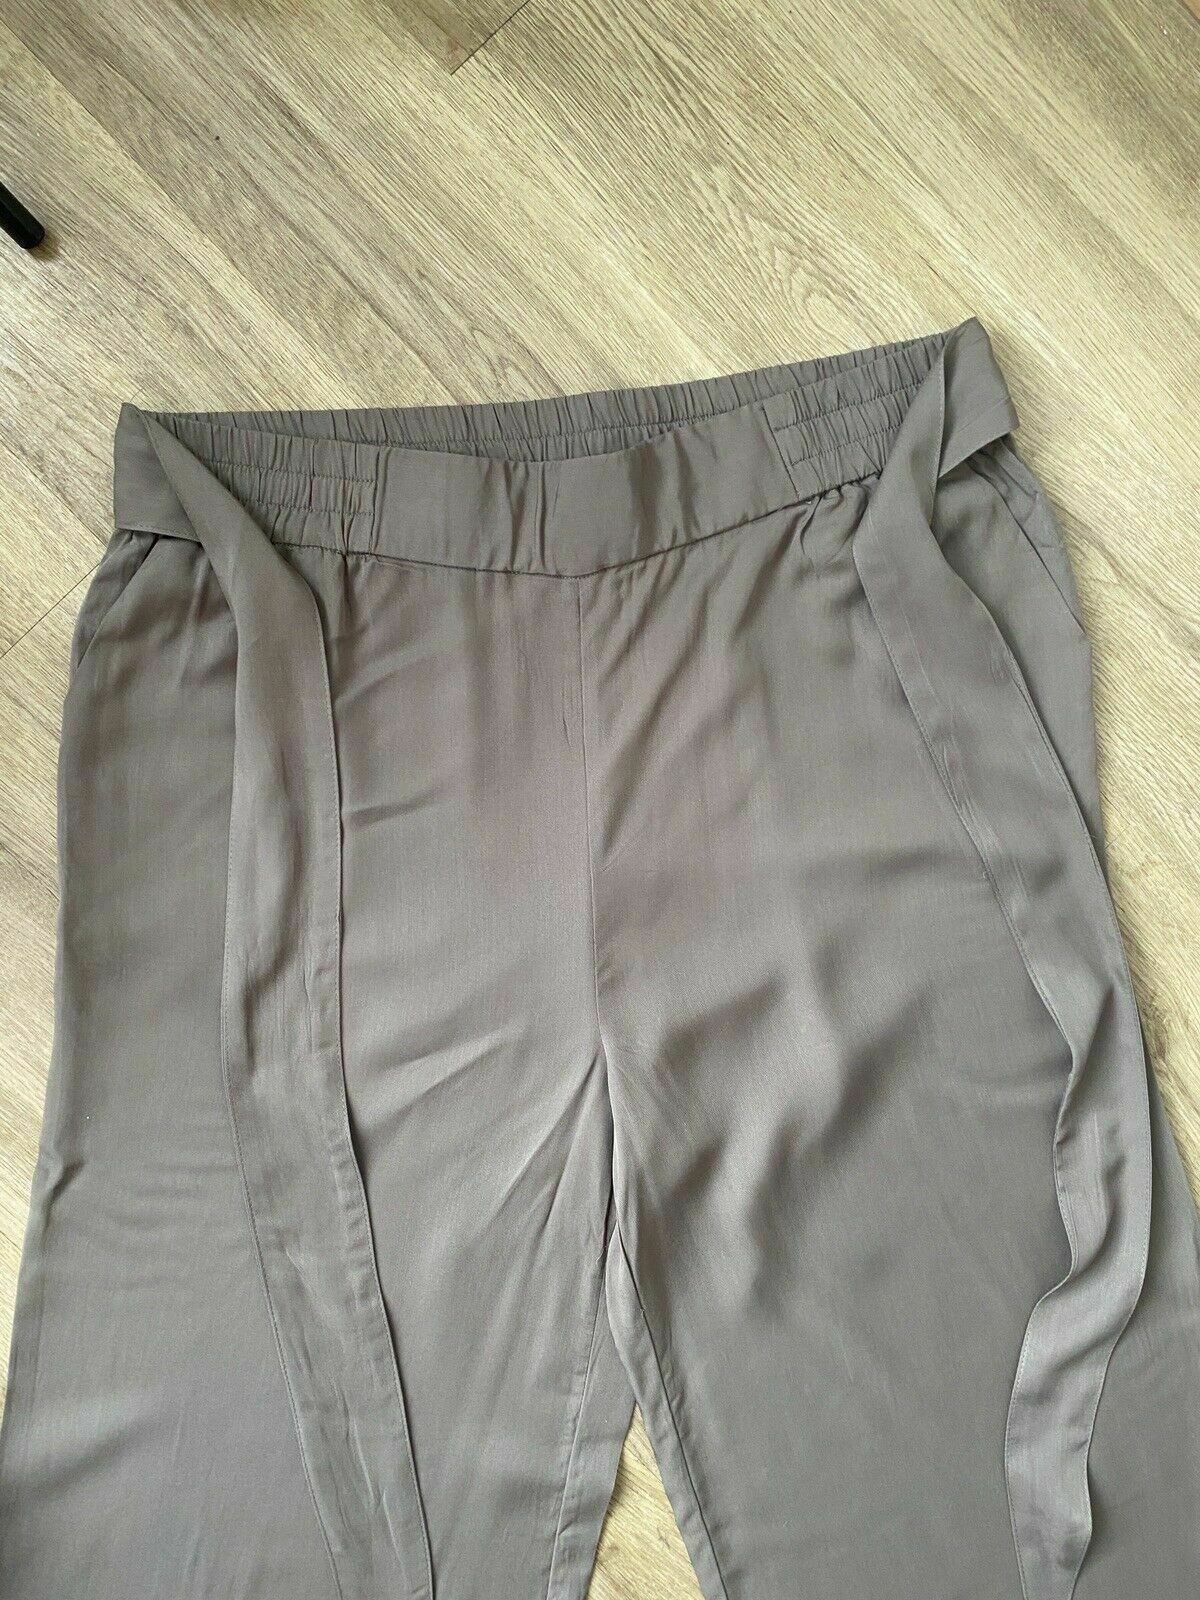 ONLY carDIANA Pant - Tarmac Green Size 18 UK Khaki Green Wide Leg Trousers